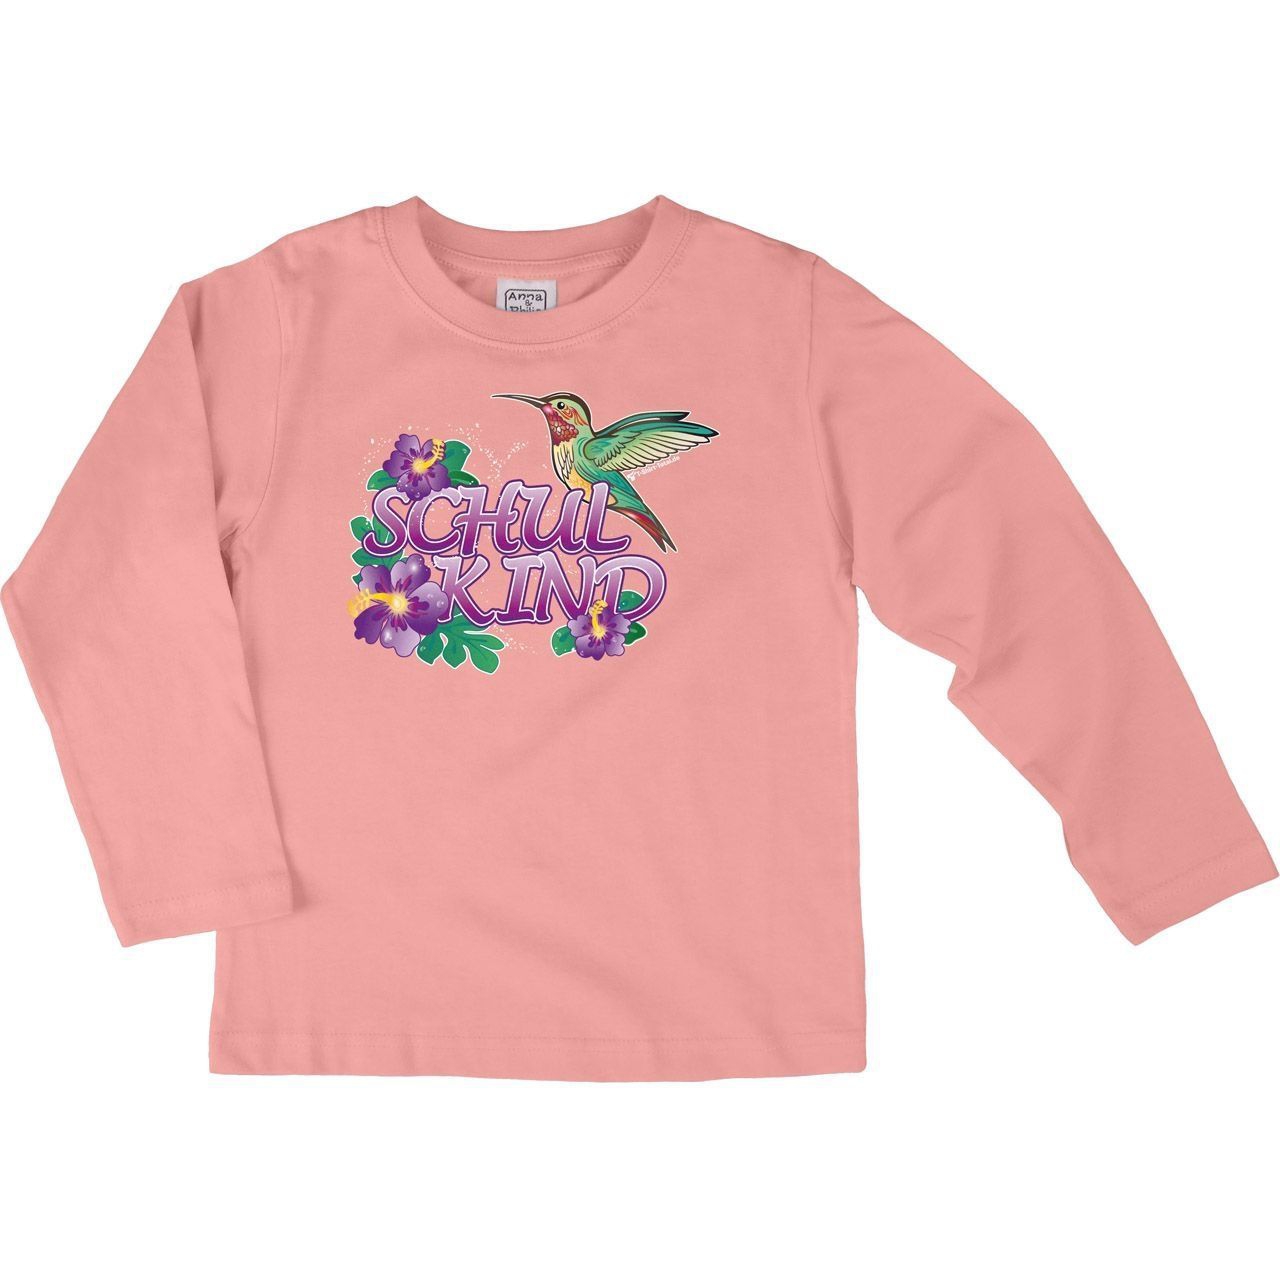 Schulkind Kolibri Kinder Langarm Shirt rosa 134 / 140